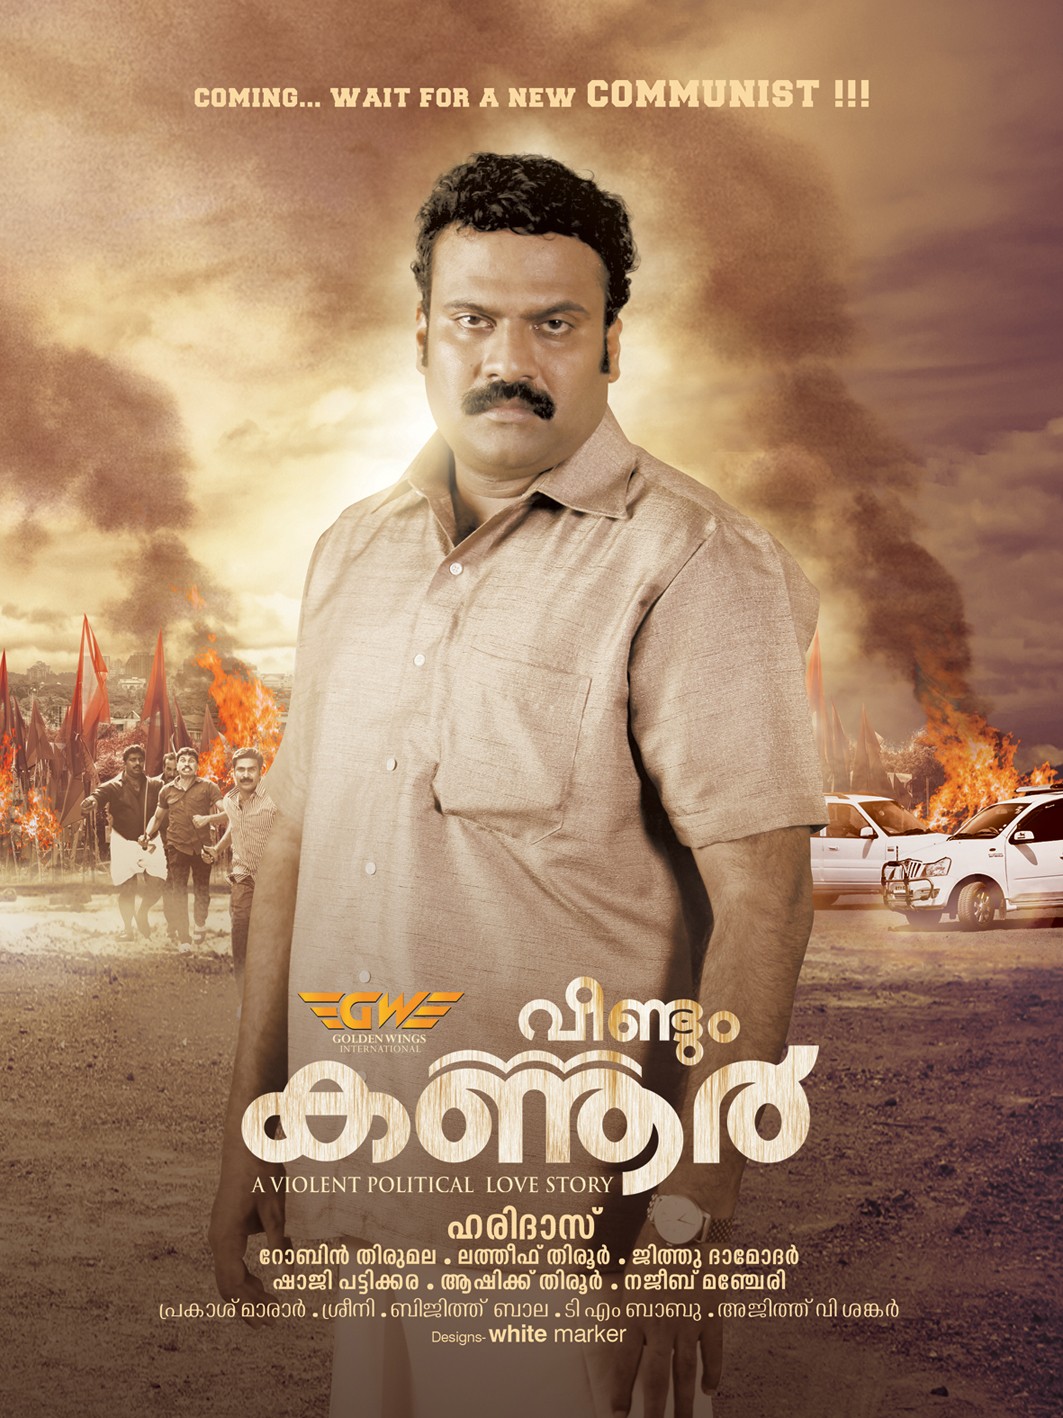 Extra Large Movie Poster Image for Veendum Kannur (#7 of 14)